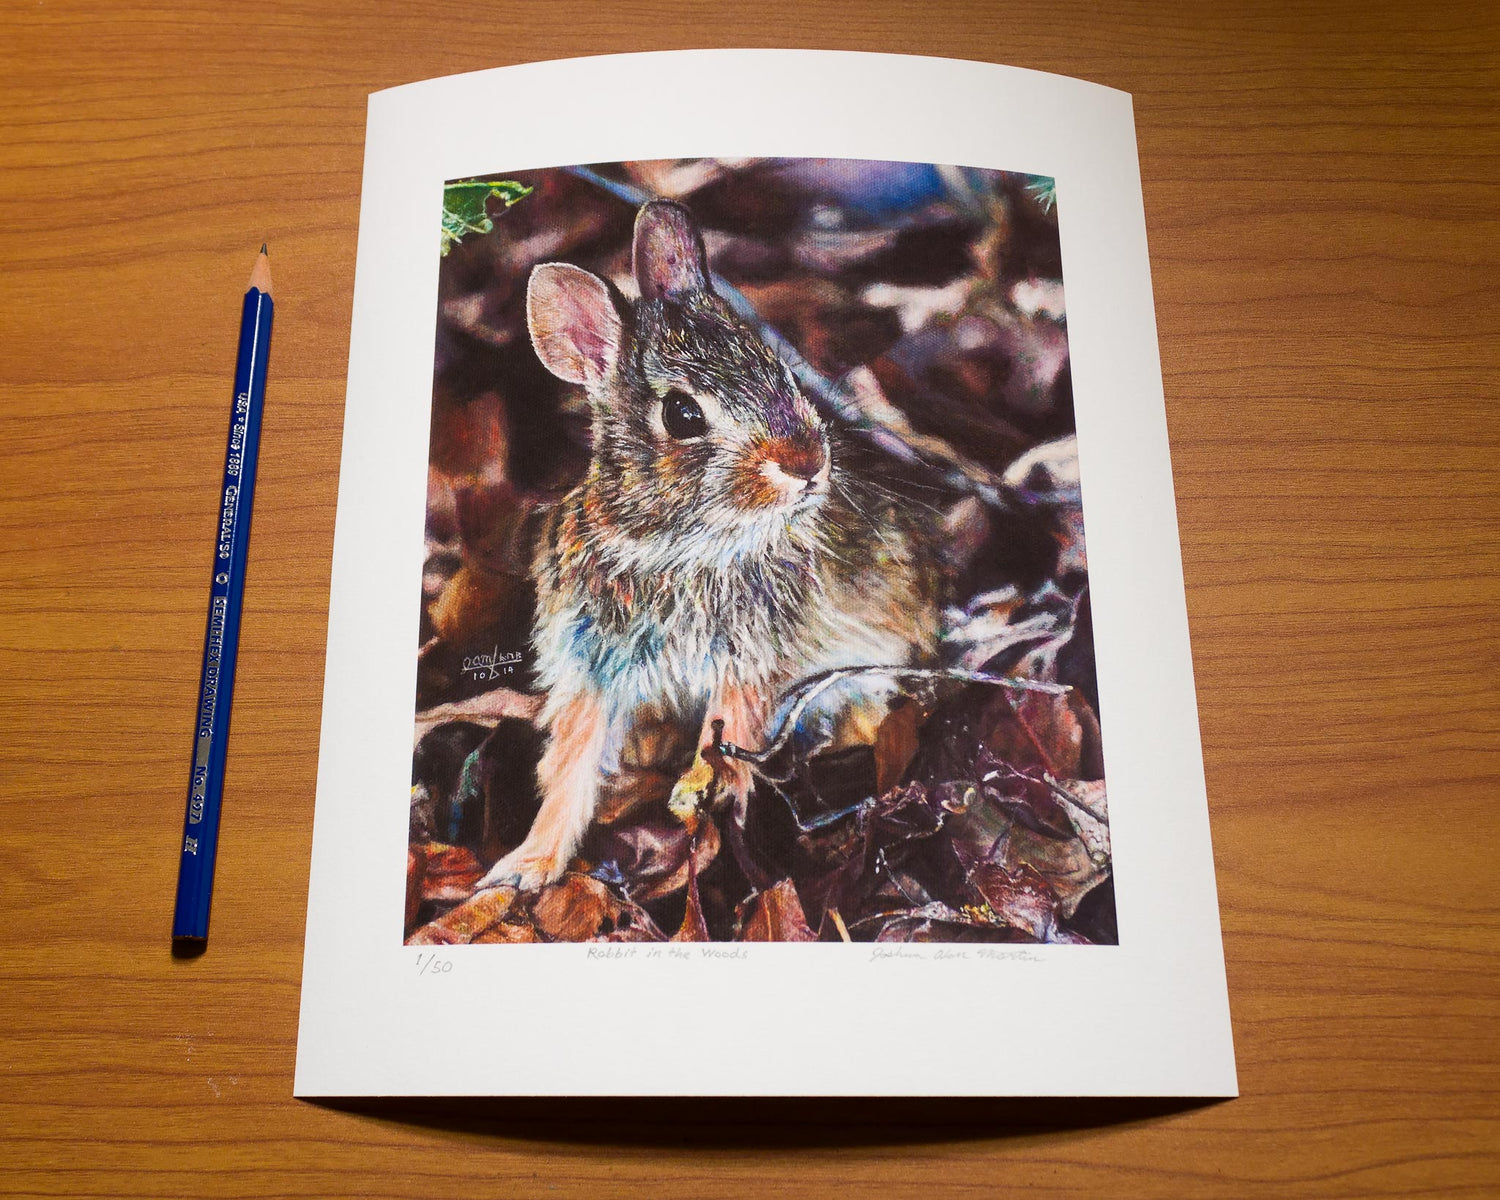 Signed fine art print by artist Joshua Martin of Rabbit in Woods..